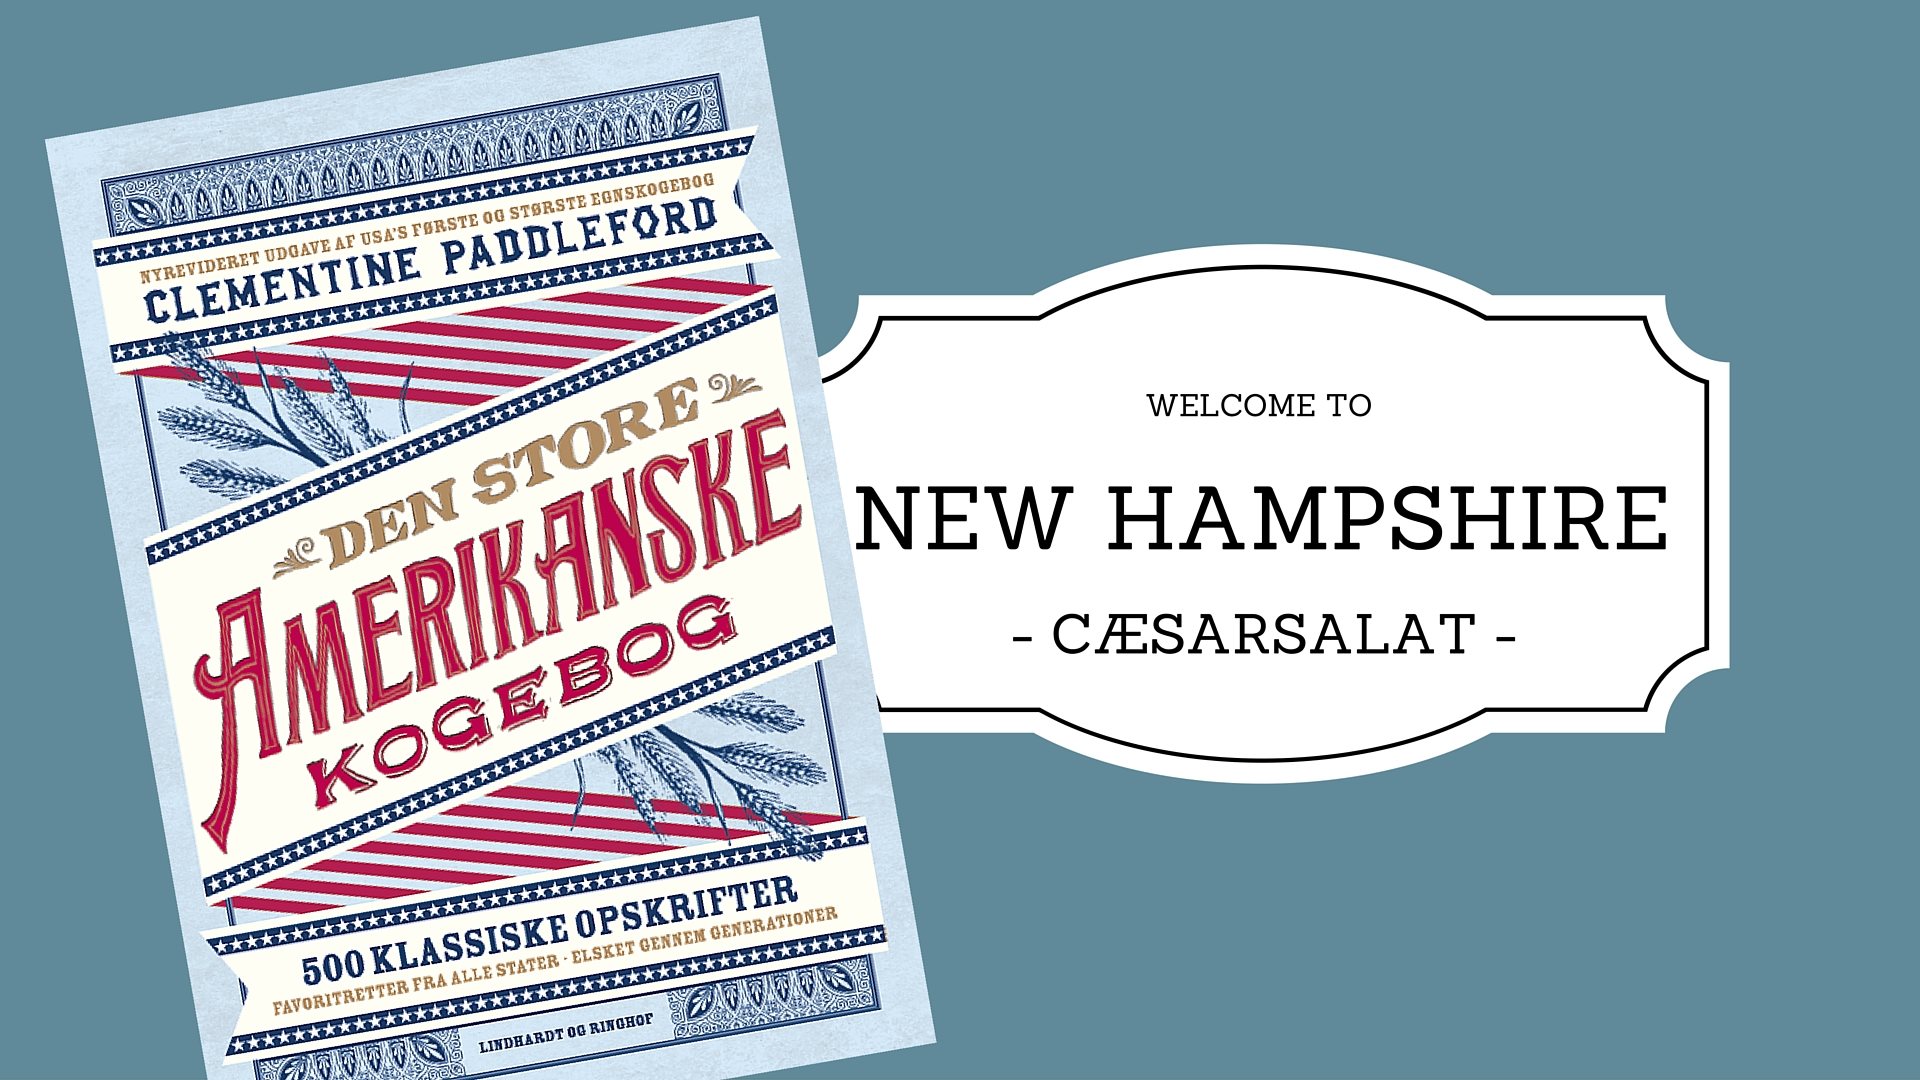 New Hampshire = cæsarsalat